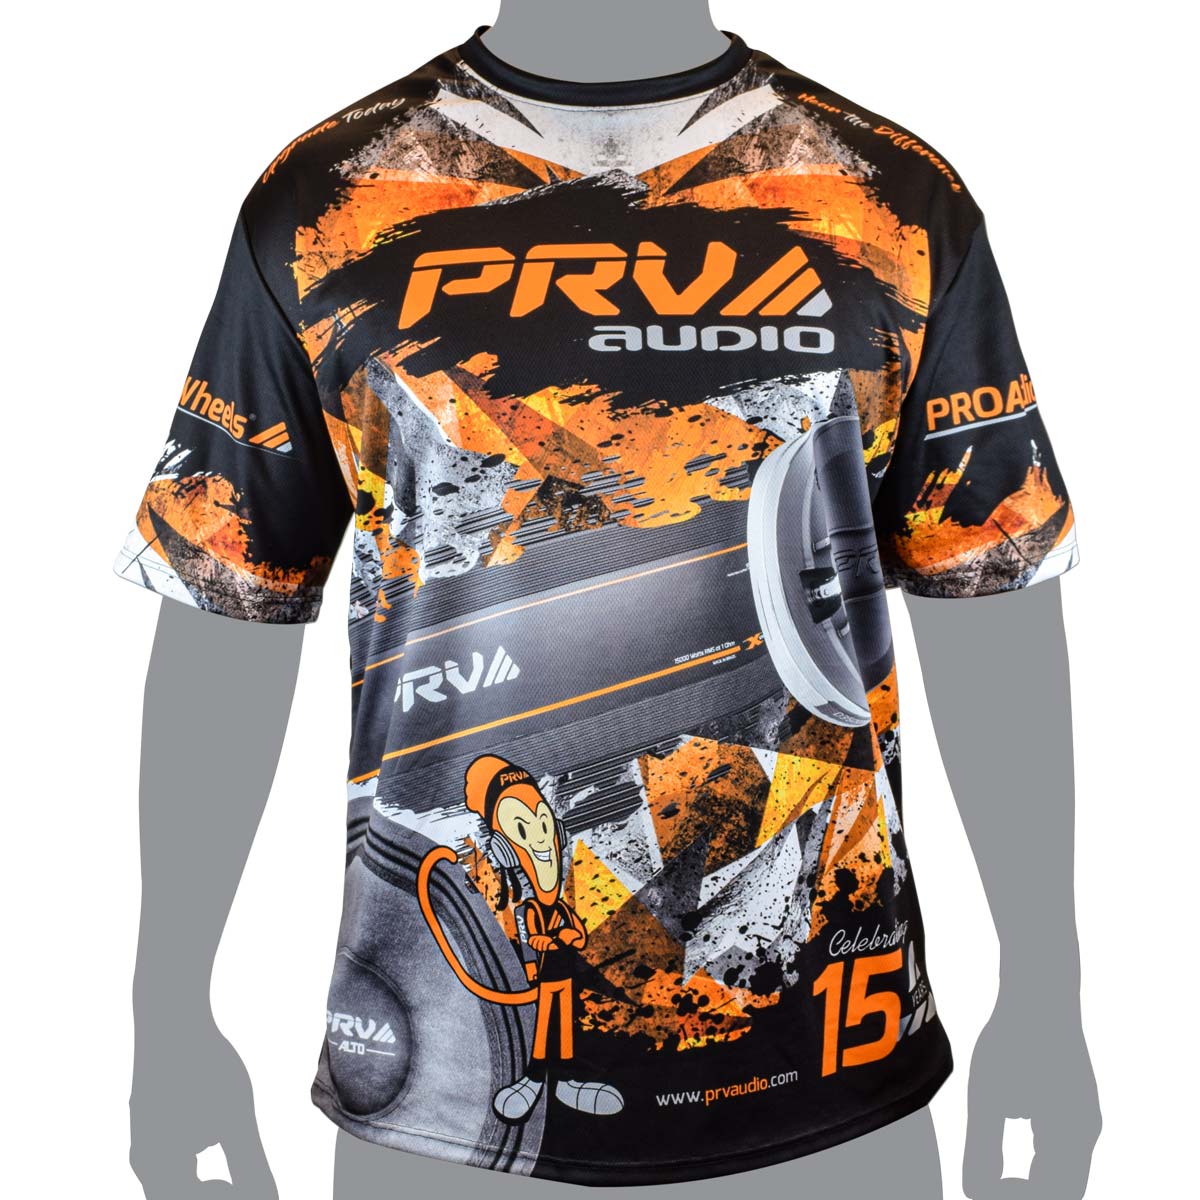 PRV-PRO-Audio-on-Wheels-t-shirt---Front-View